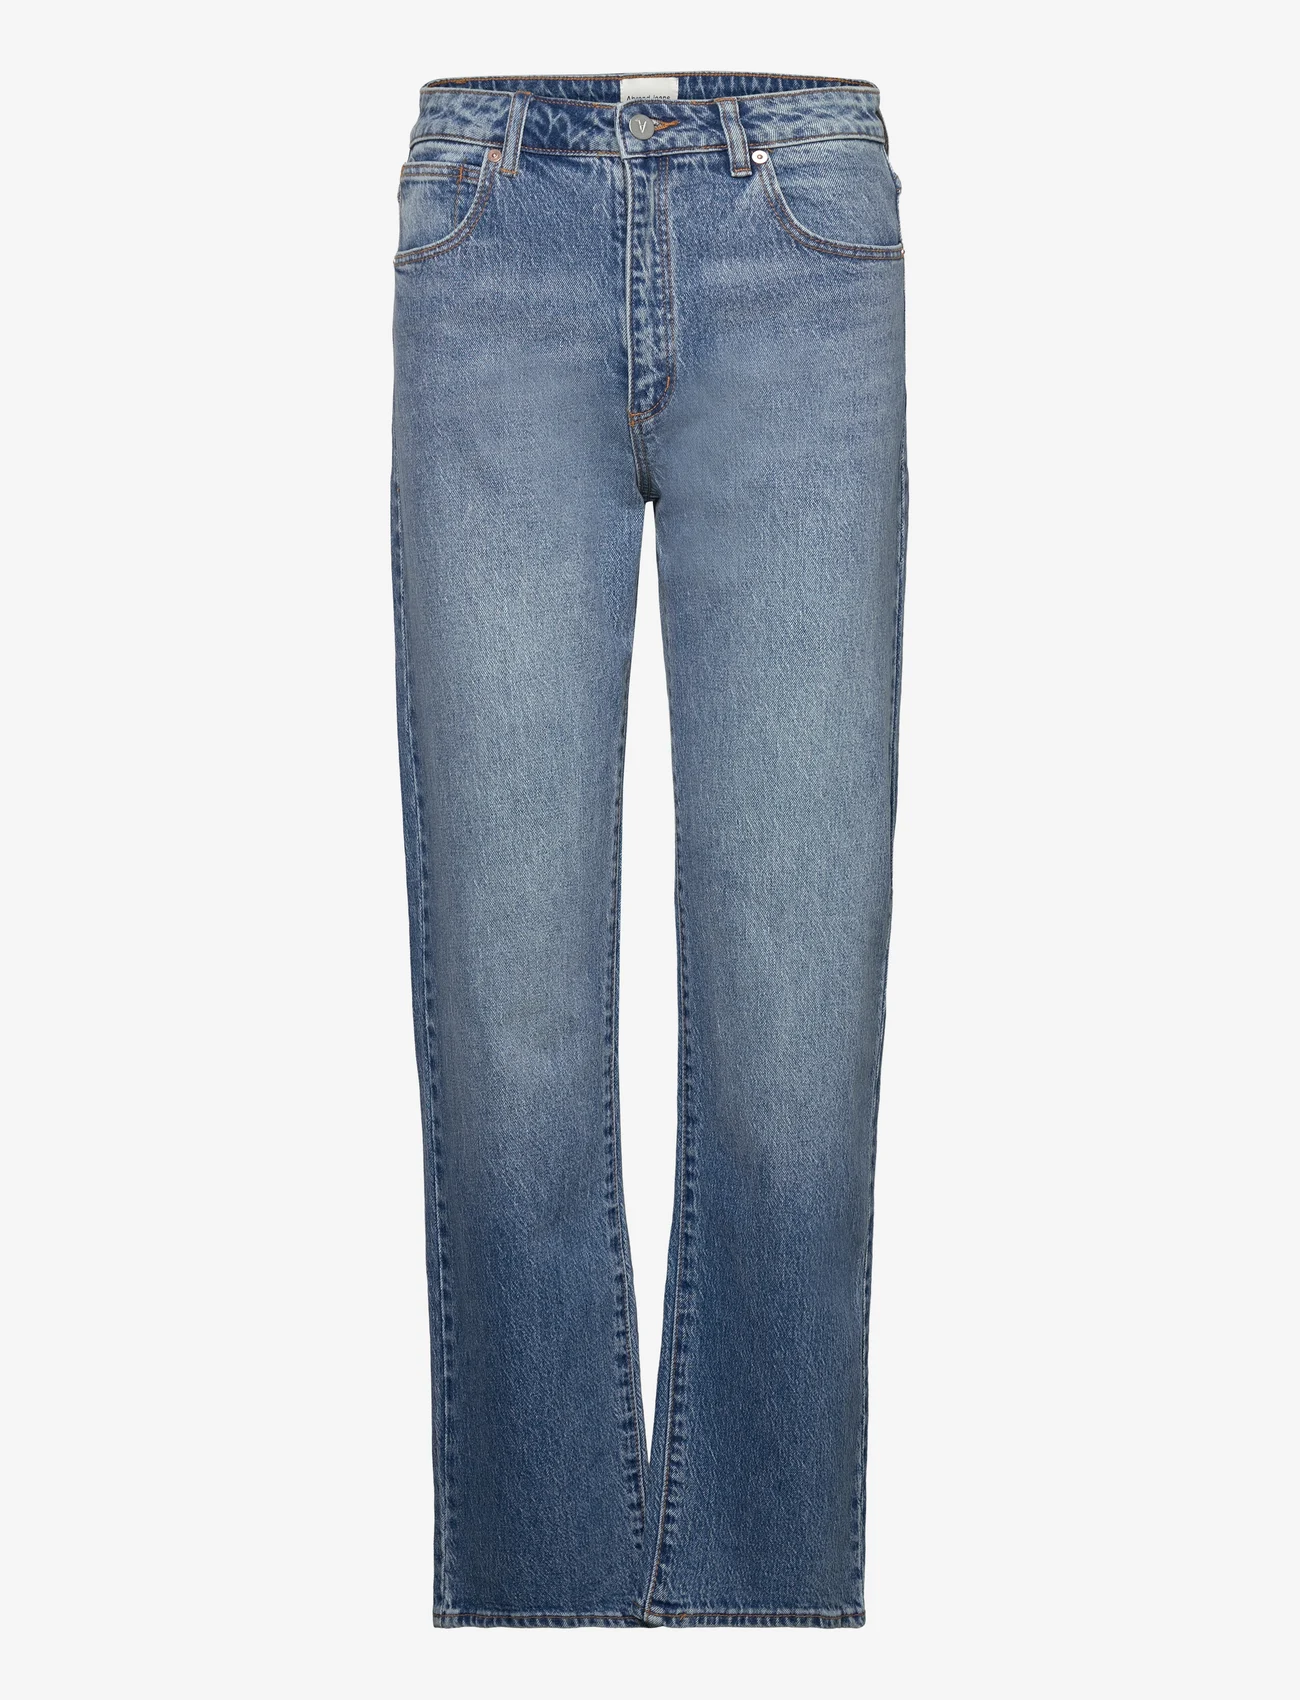 ABRAND - A 94 HIGH STRAIGHT ERIN - raka jeans - blue - 1